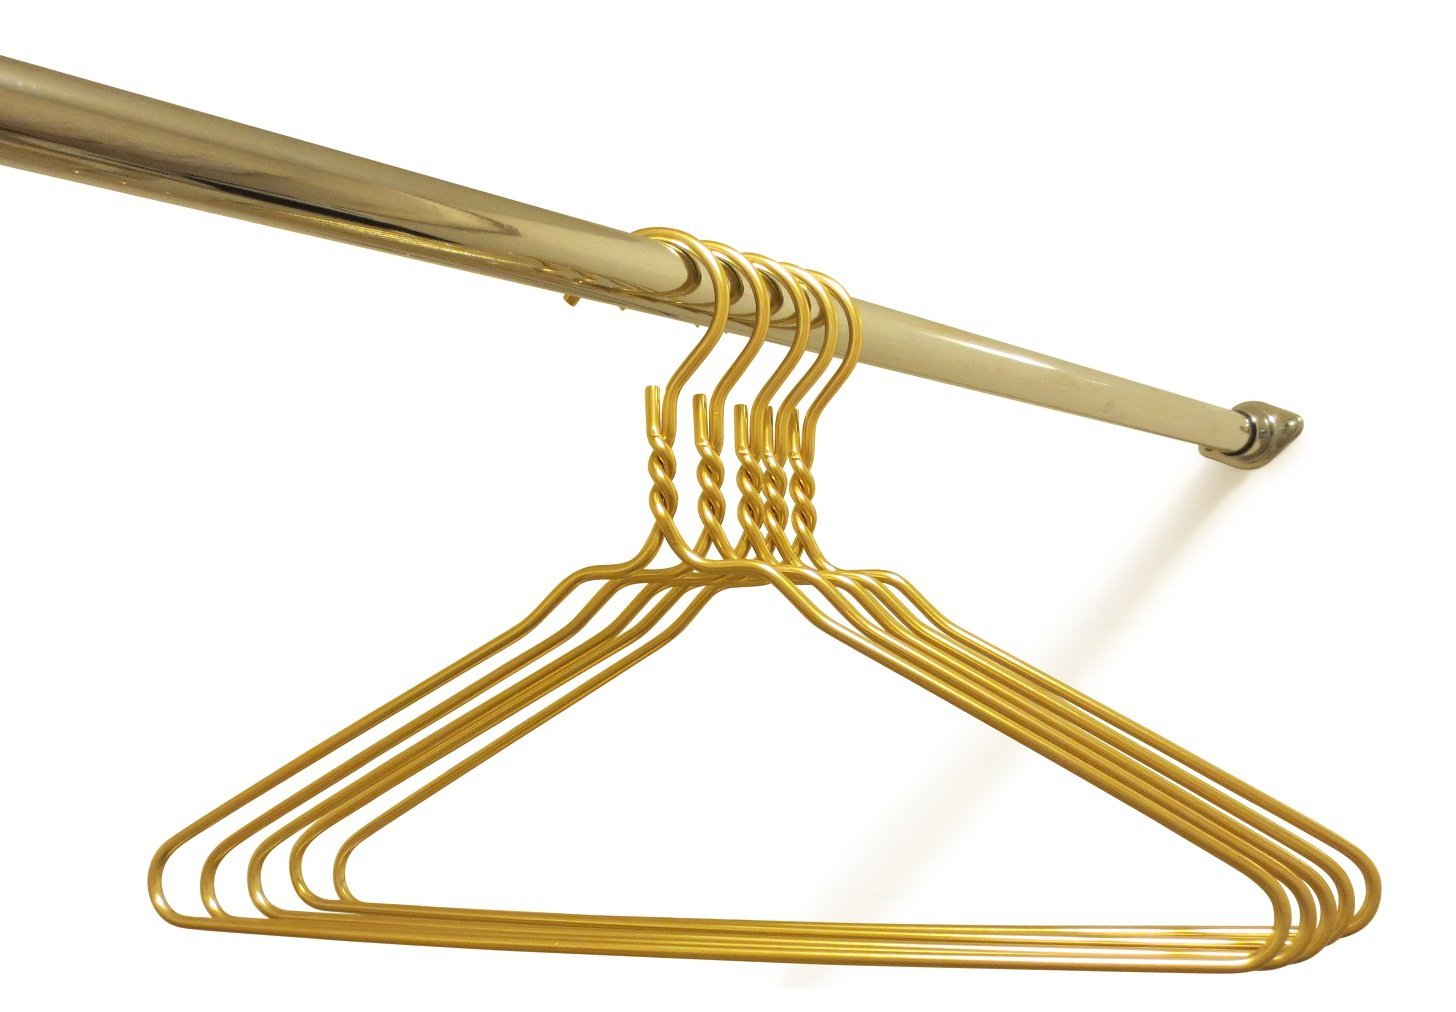 Quality Hangers Beautiful Gold Aluminum Metal Suit Hangers Heavy Duty Coat Hangers Adult Size Gold 10 